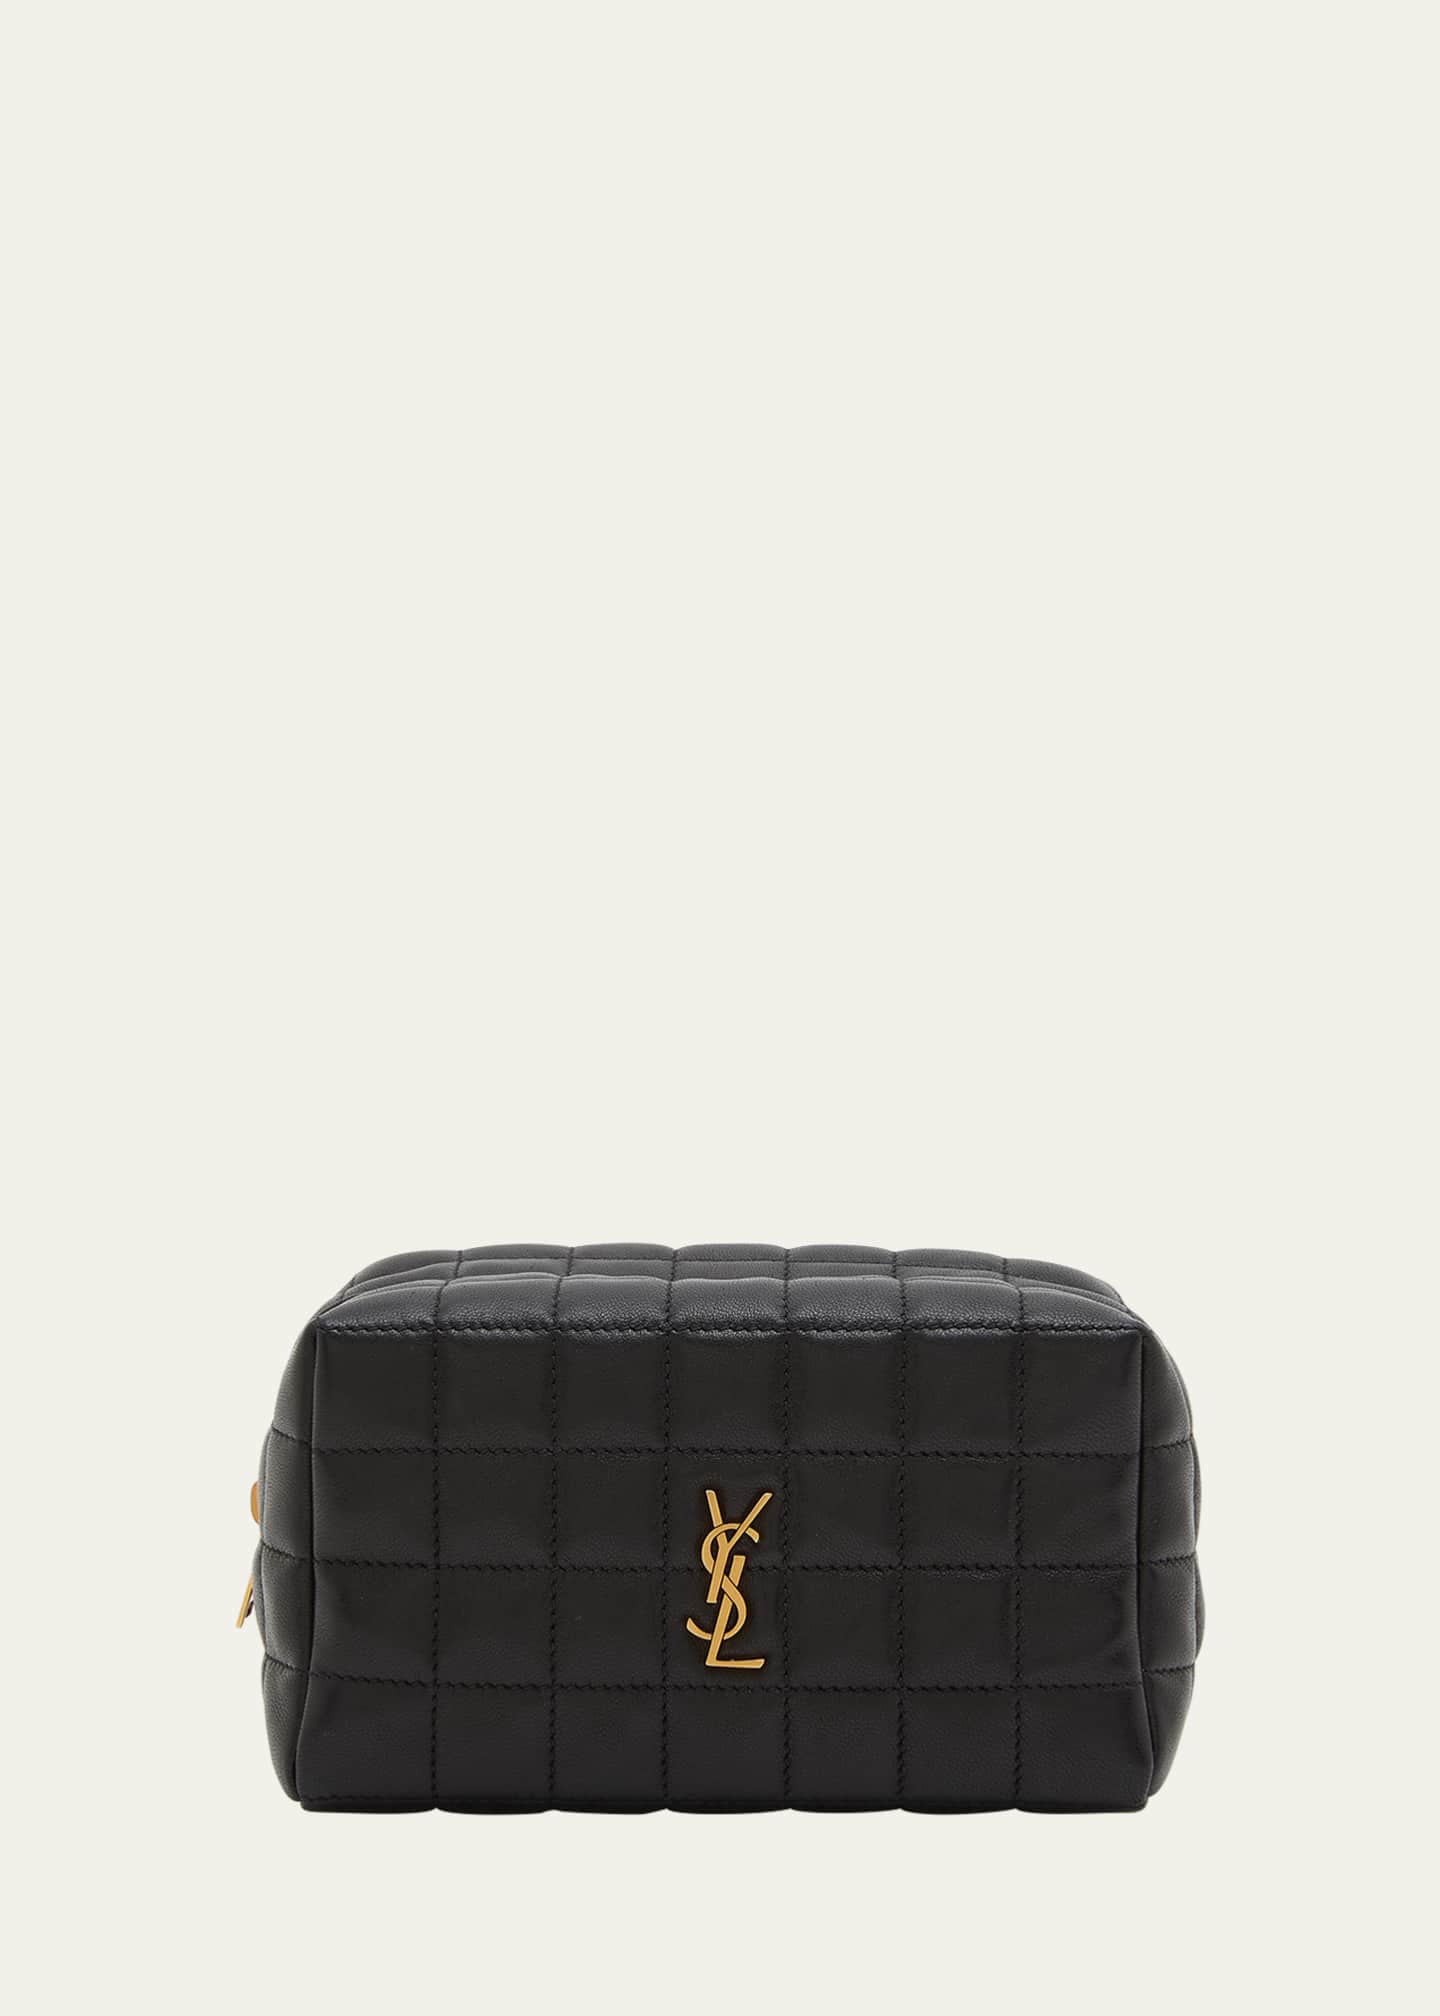 Ysl Cosmetic Bag 